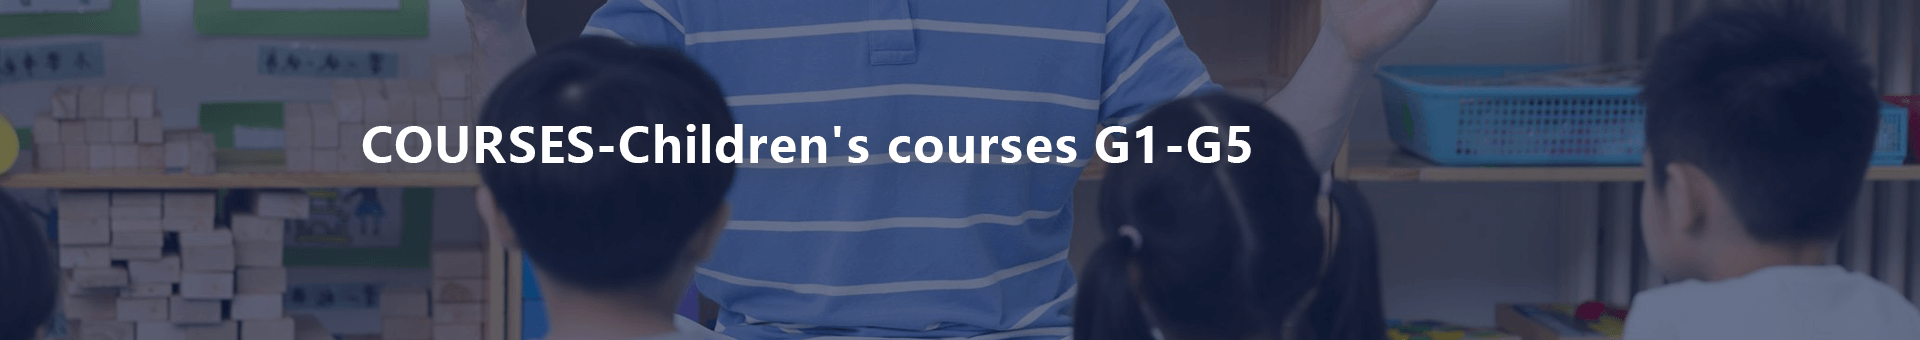 Children's courses G1-G5